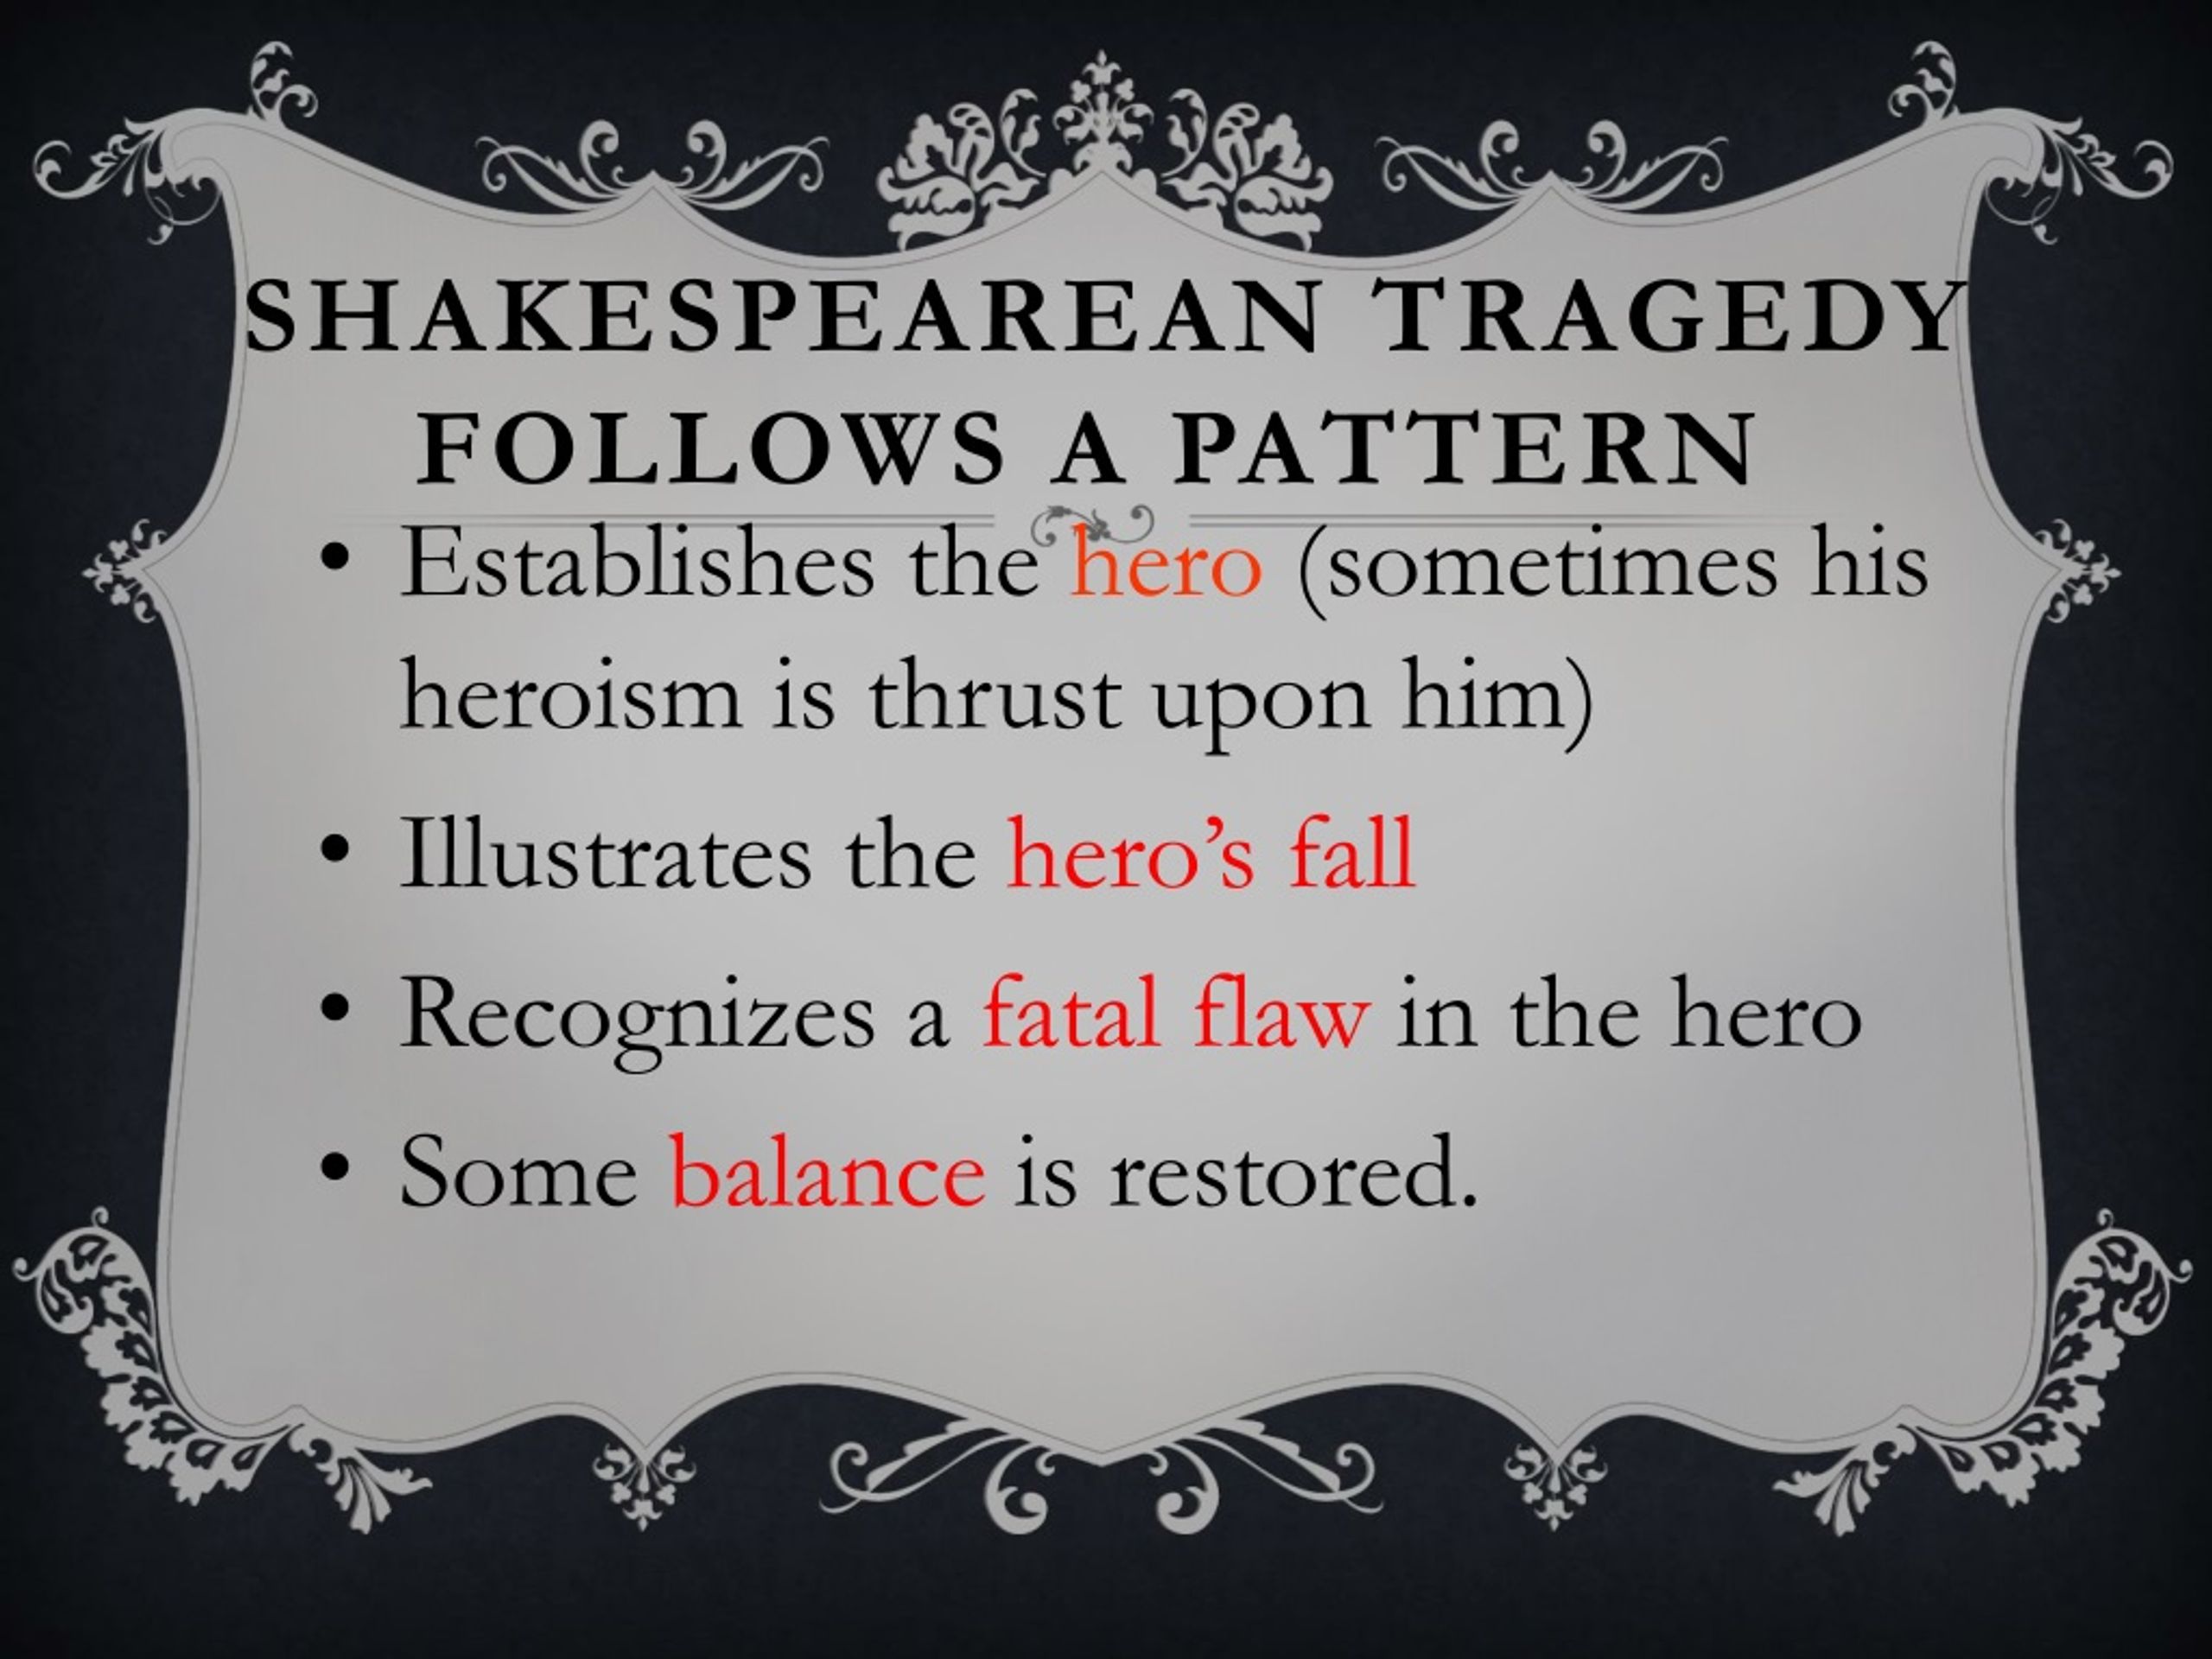 write an essay on shakespearean tragedy